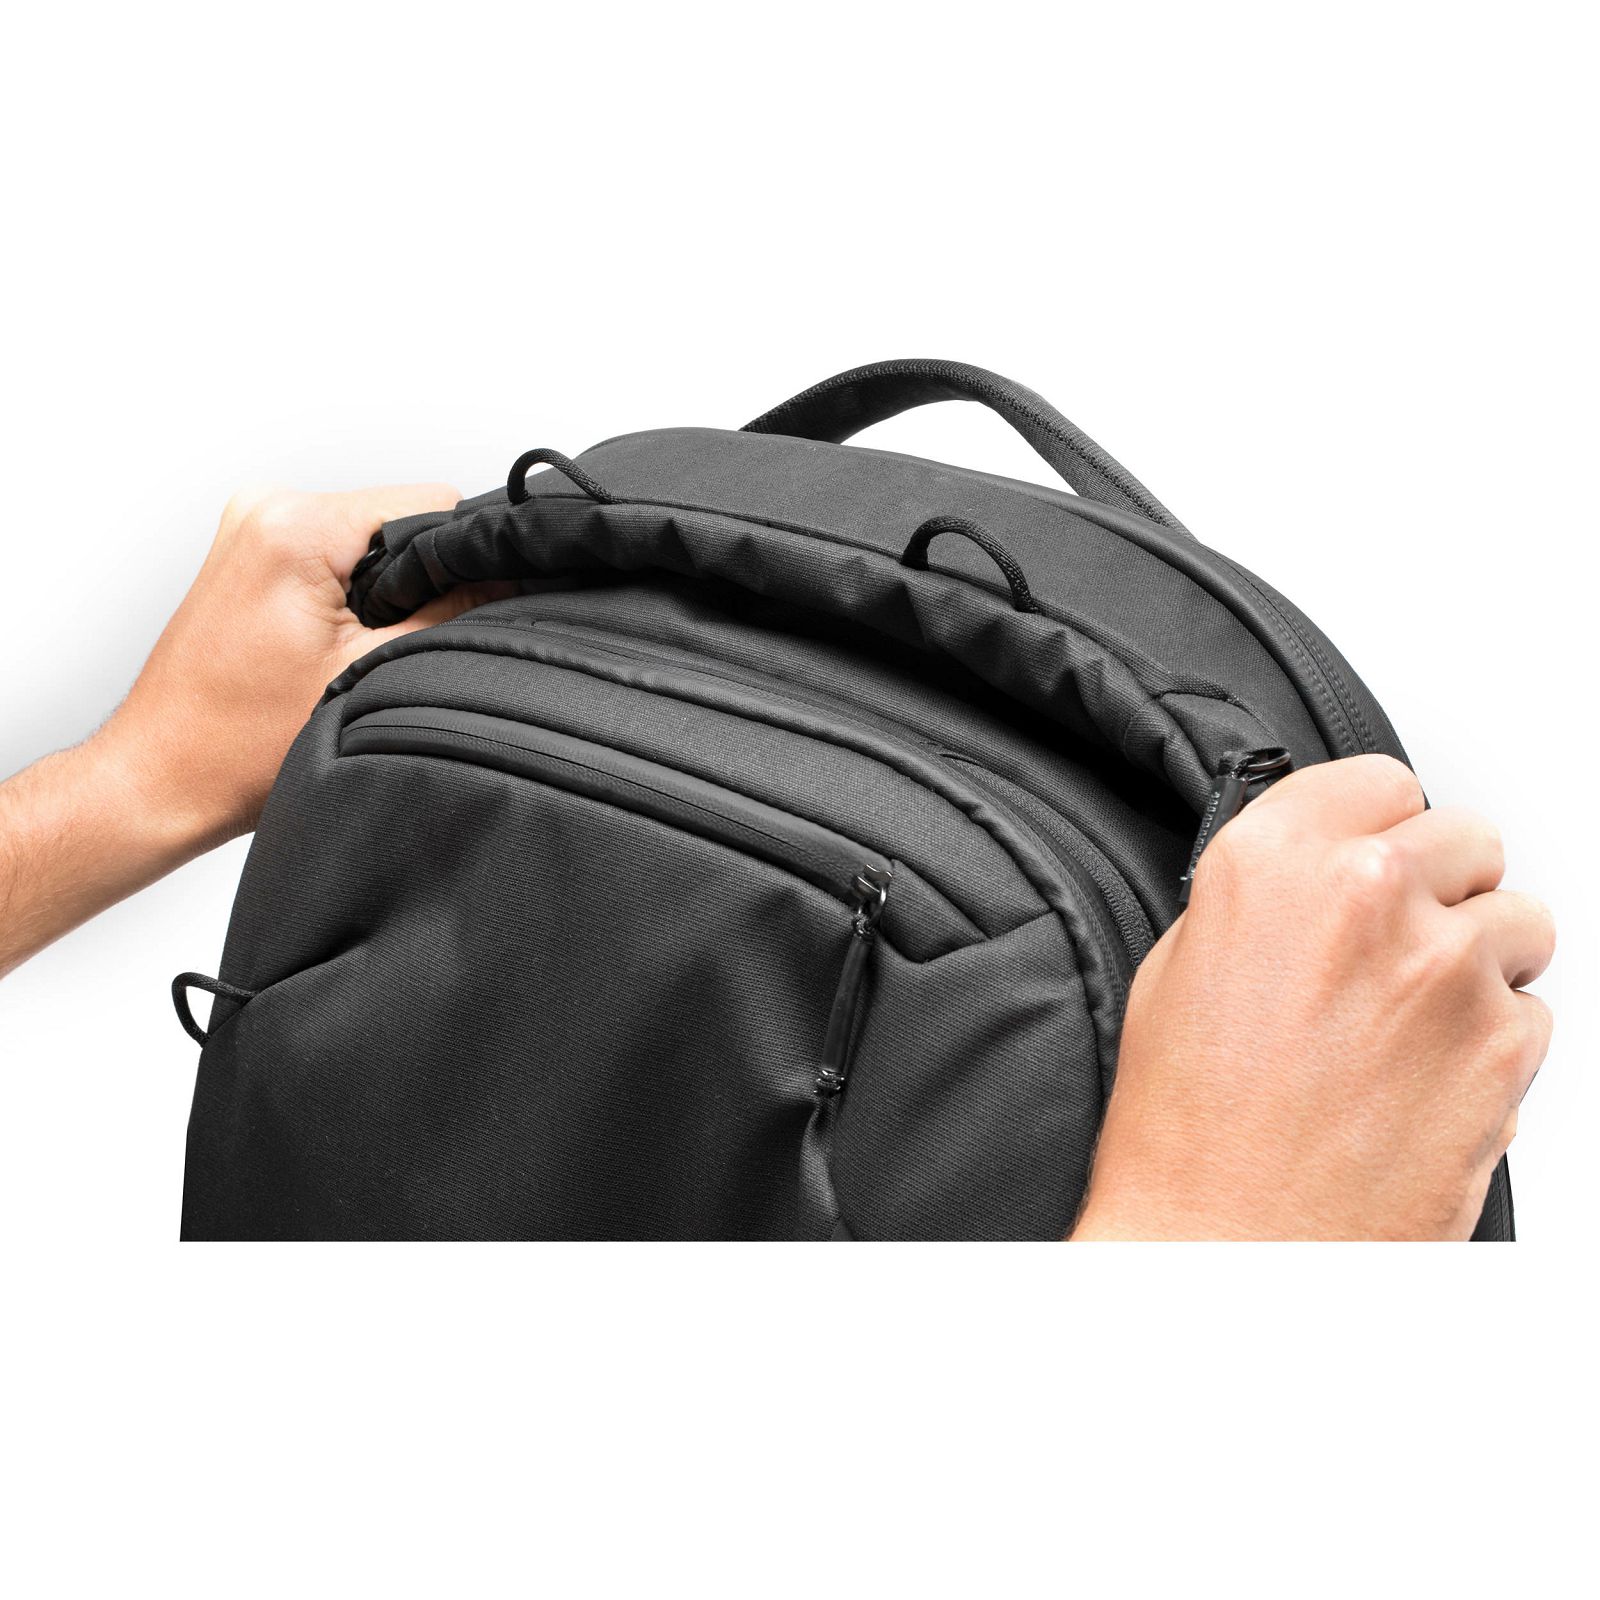 Peak Design Travel Backpack 45L Black ruksak za fotoaparat i foto opremu (BTR-45-BK-1)